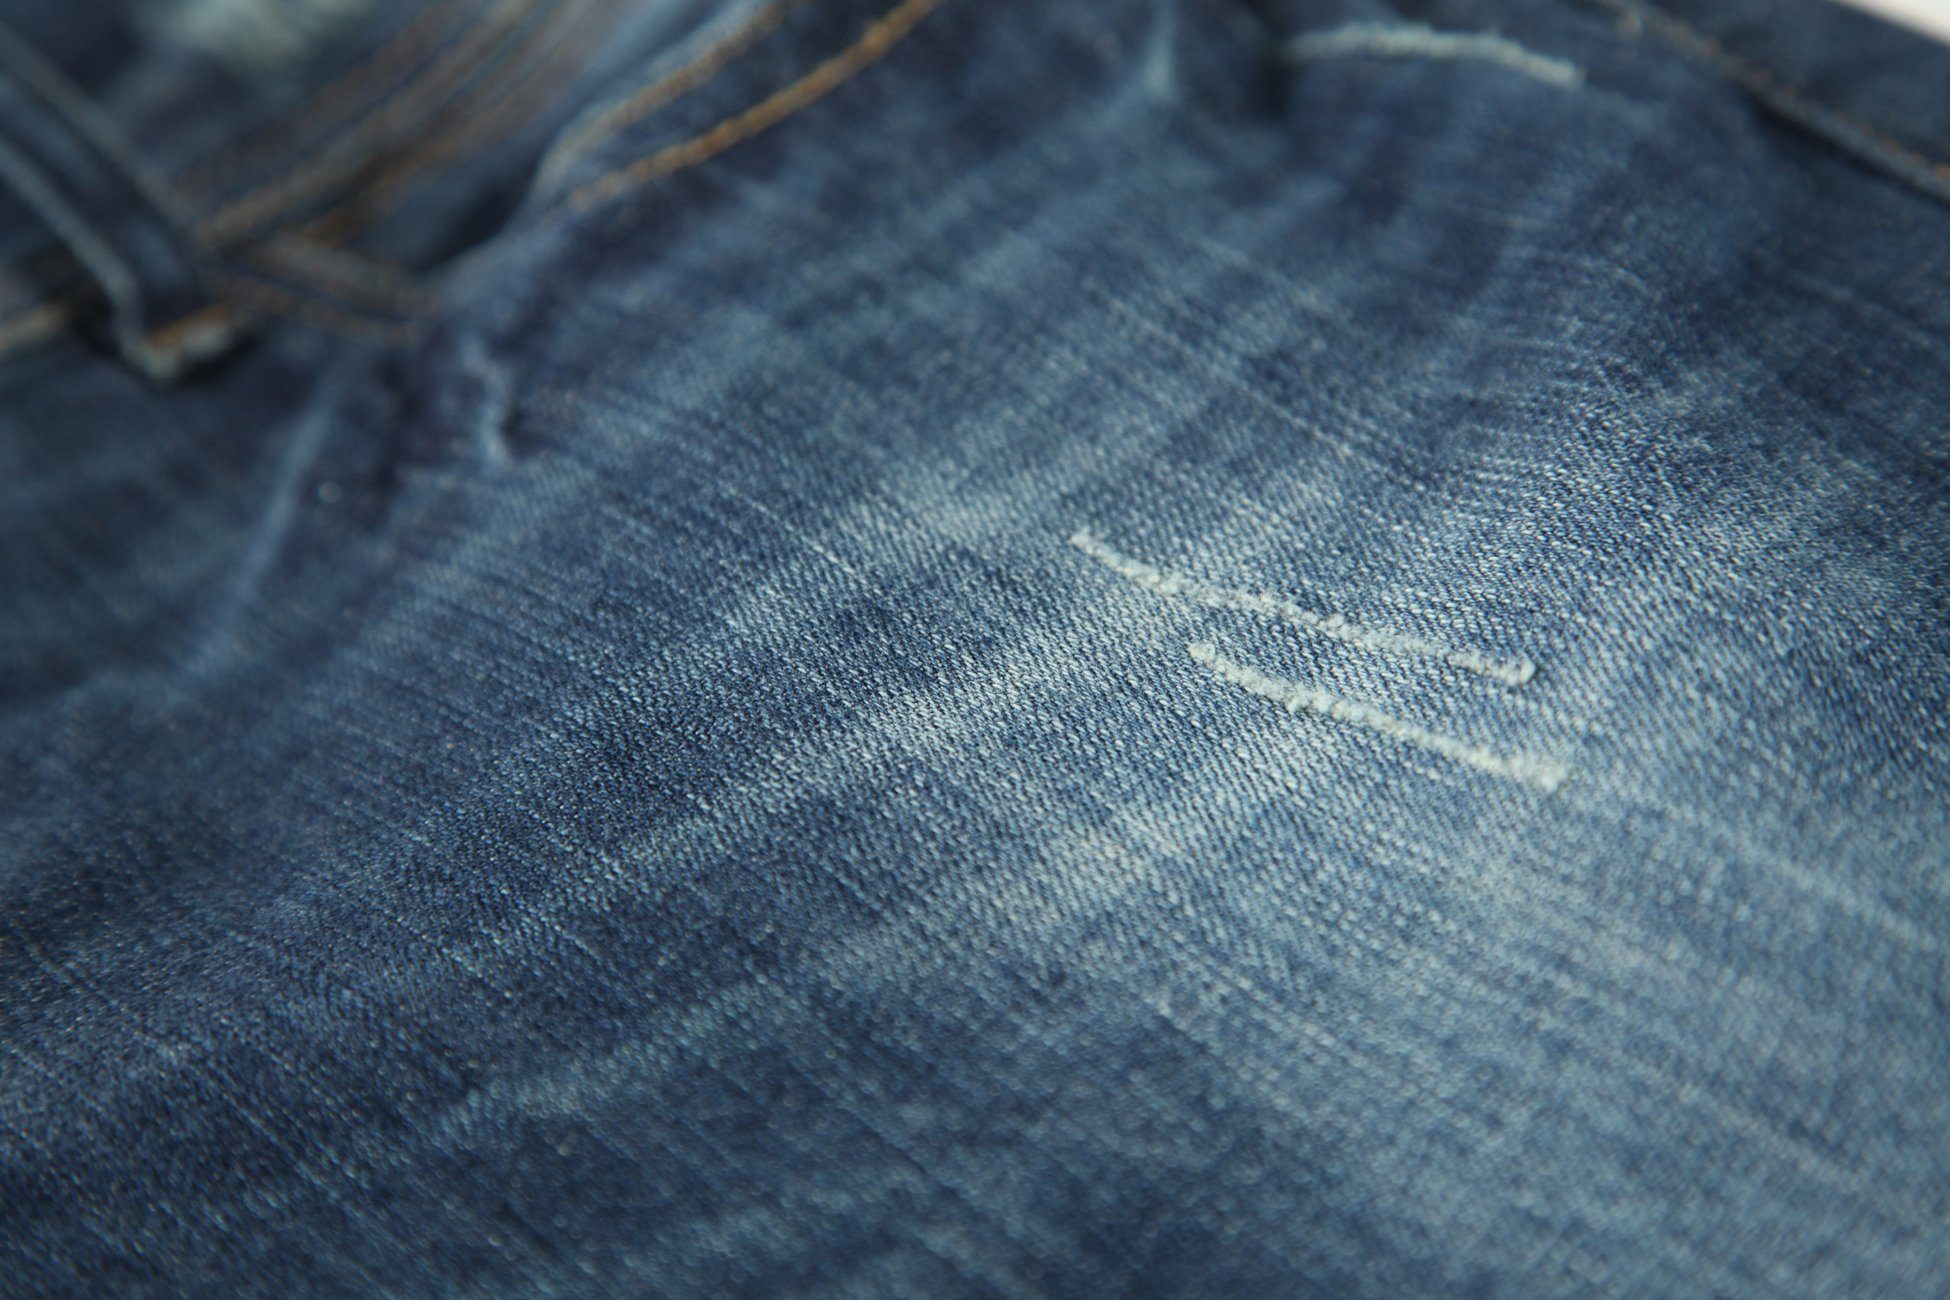 grau be Straight-Jeans geschnittene gerade waist low j137p-straight styled Hüfthose Damenjeans, 5-pocket